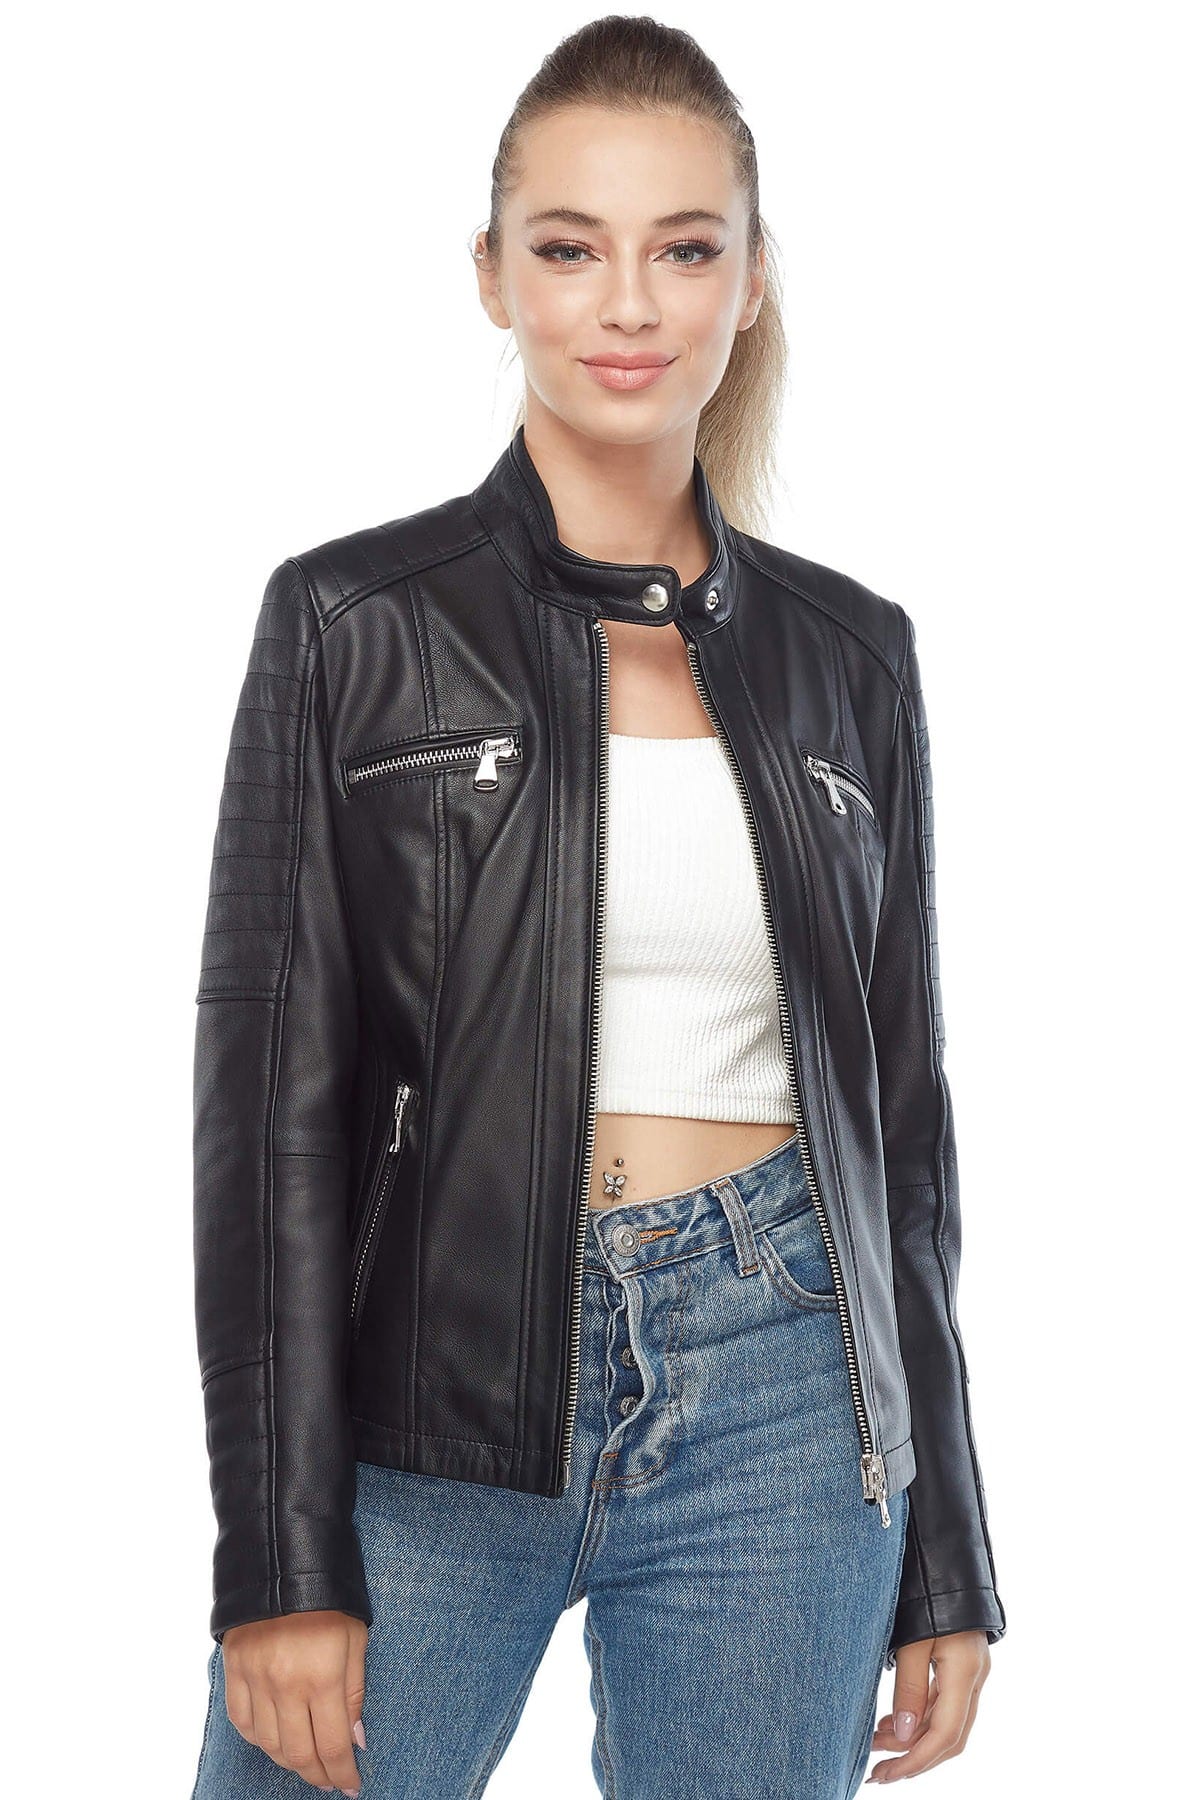 Sarah Archer Genuine Leather Jacket in Black2